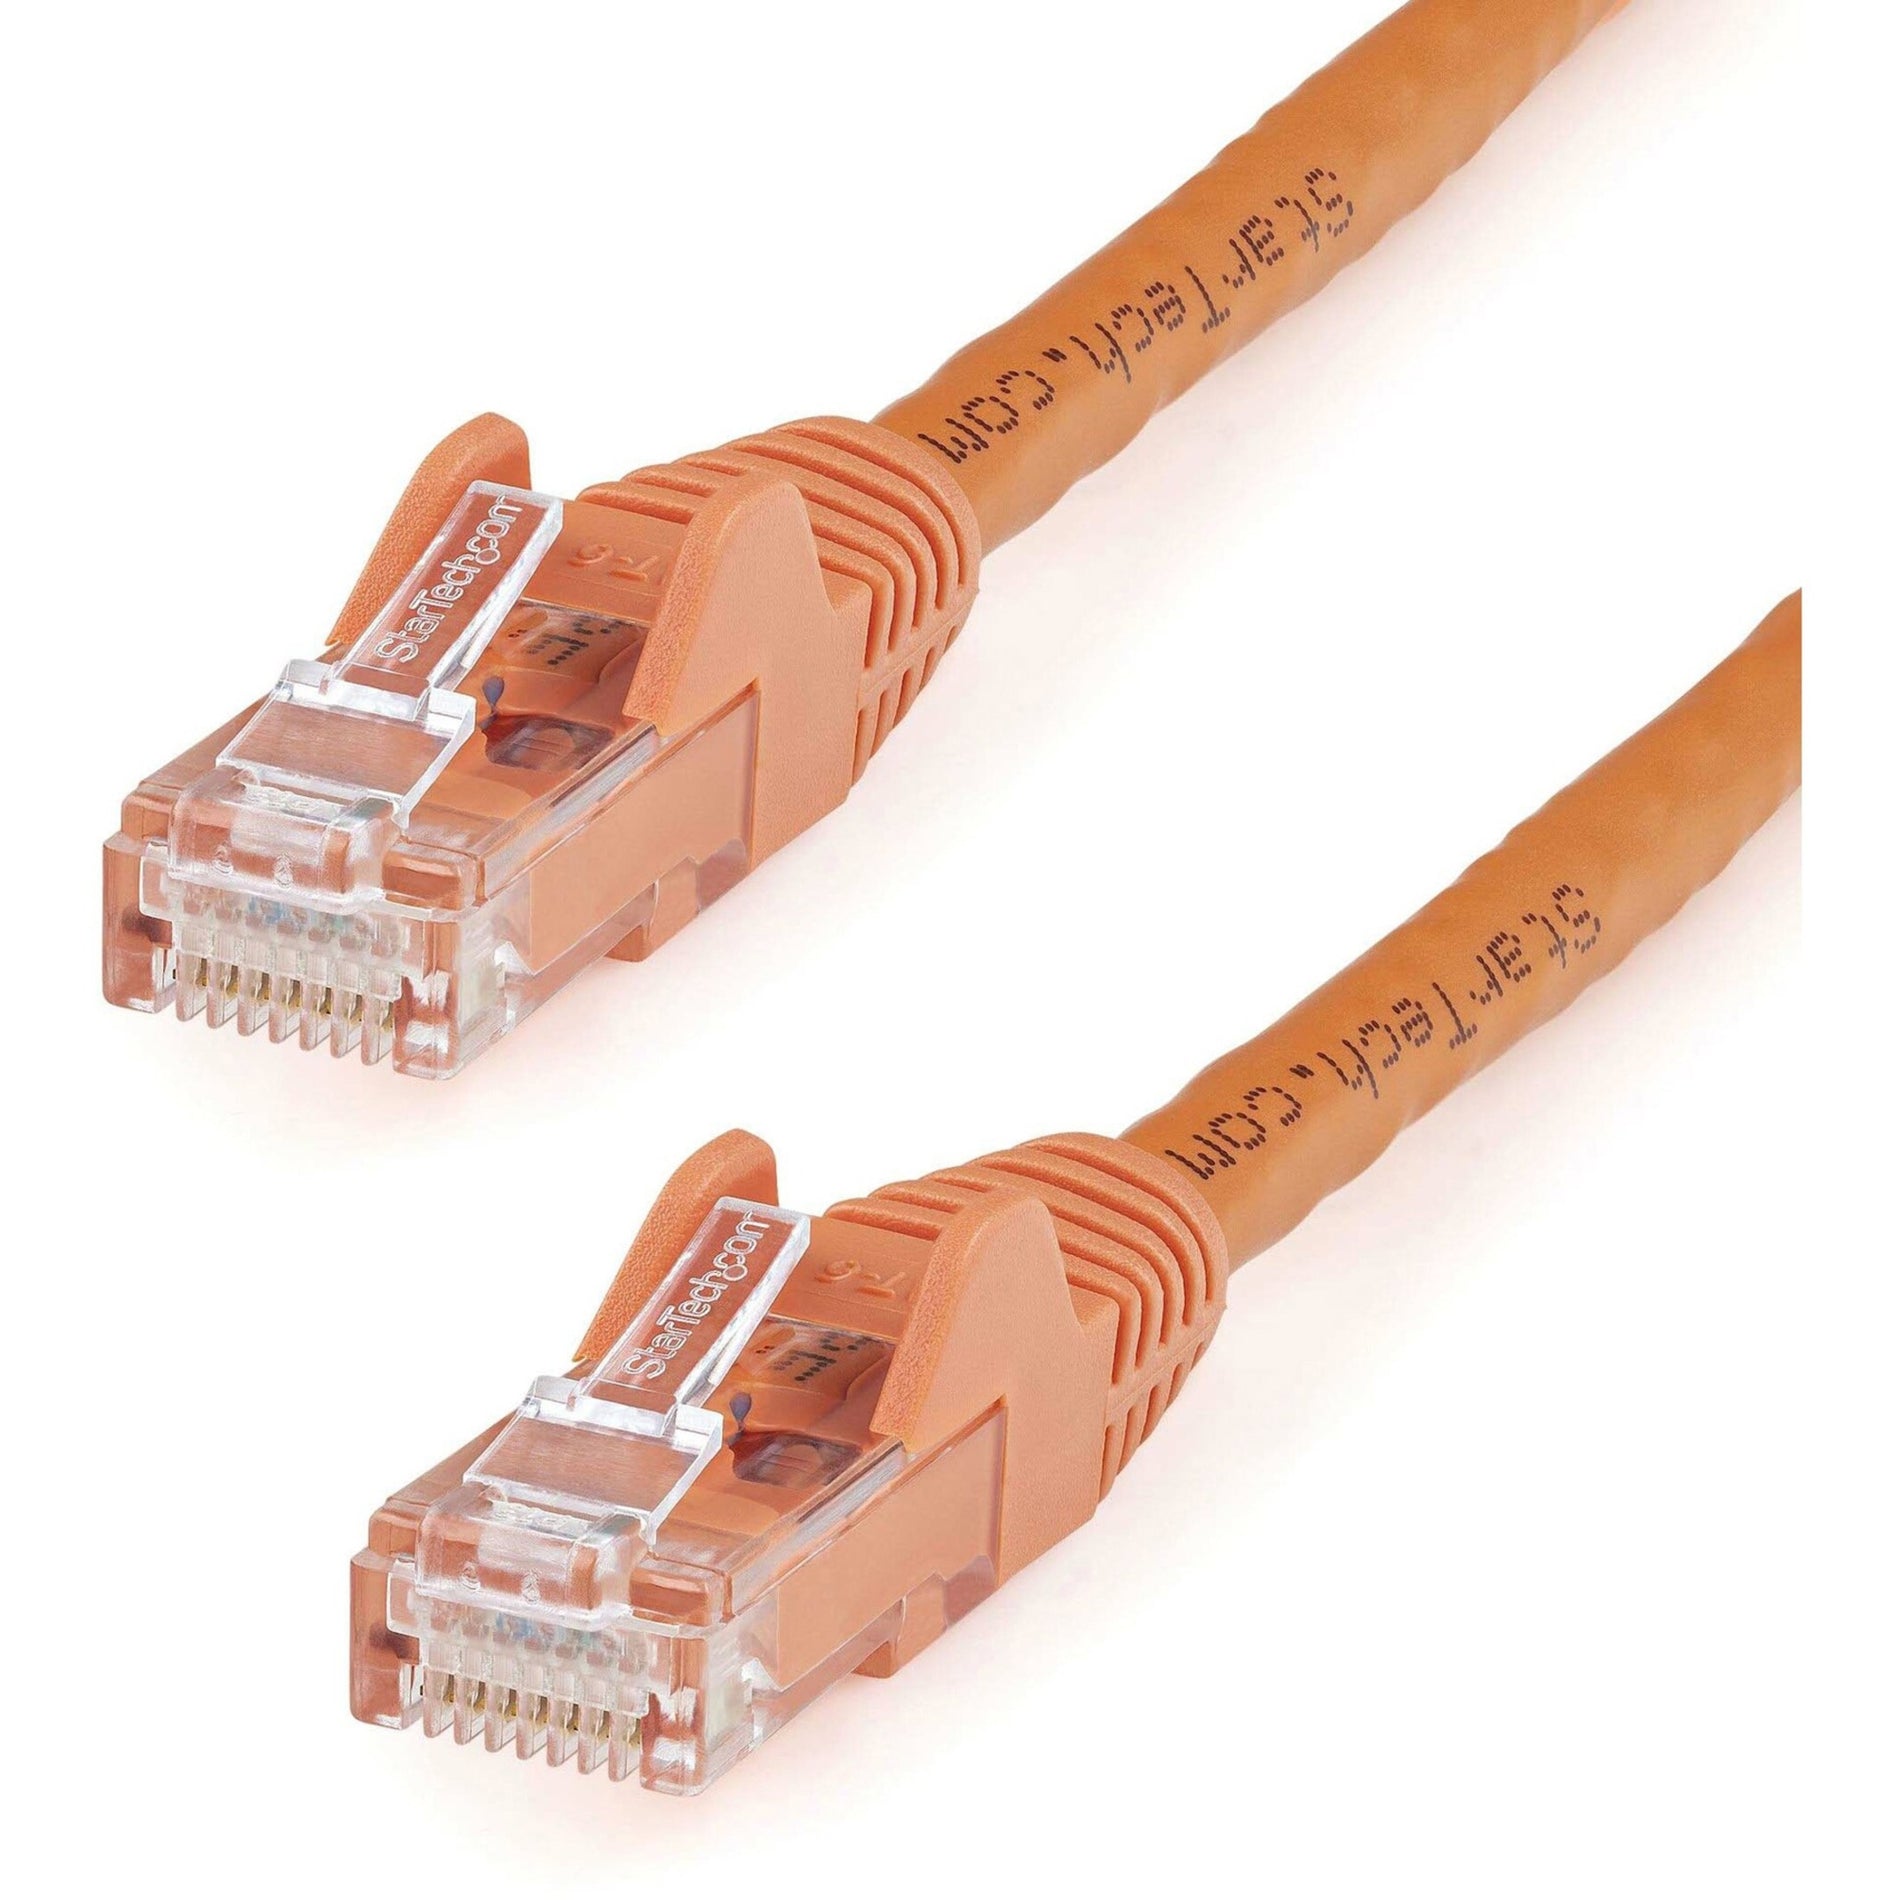 StarTech.com N6PATCH5OR Cat6 Patch Cable, 5ft Orange Ethernet Cable, Snagless RJ45 Connectors